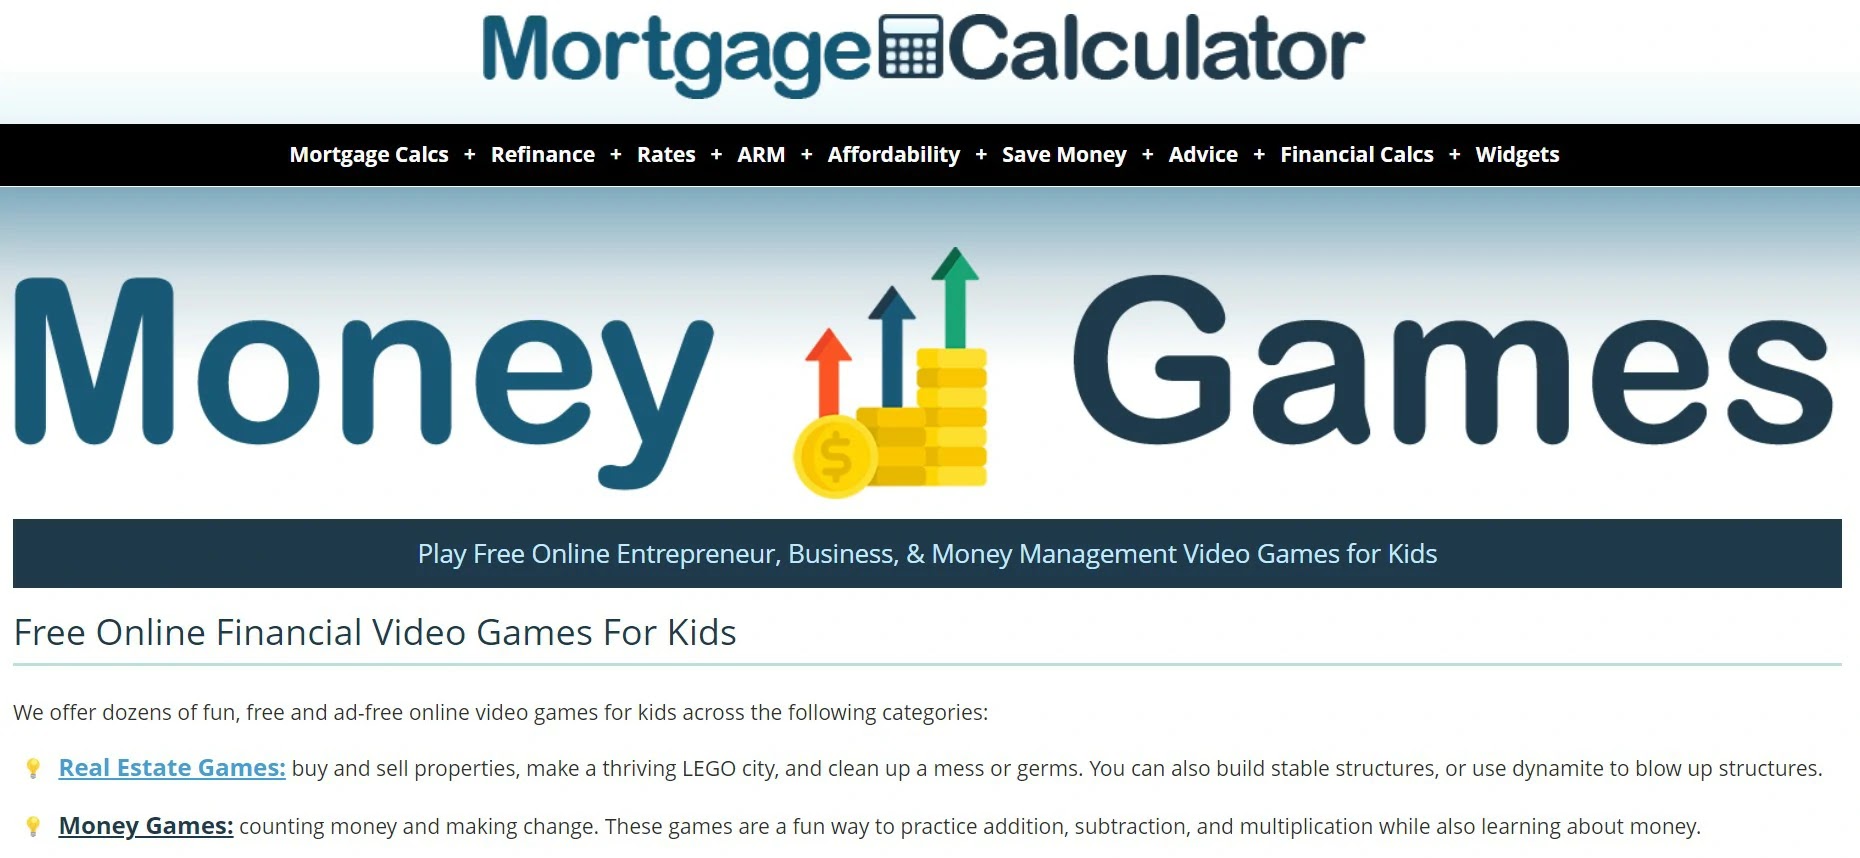 Website Game Uang untuk Anak website Mortgagecalculator.org